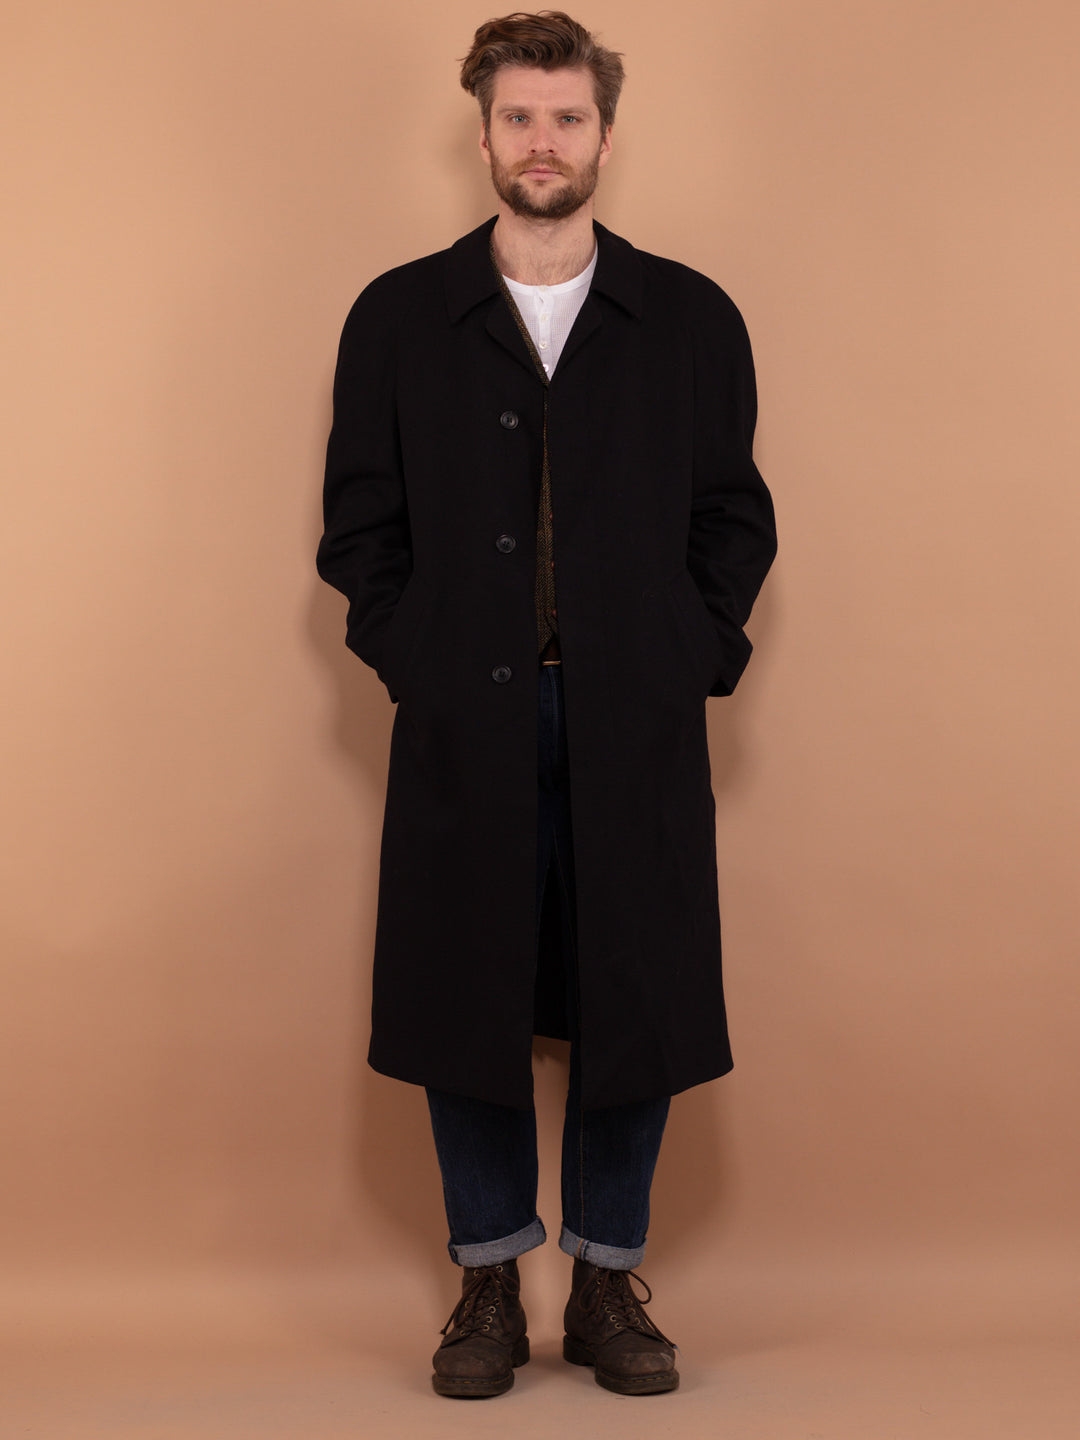 Long Wool Topcoat 70's, Size L Large, Old Fashioned Loden Wool Coat, Vintage Men Clothing, Virgin Wool Spring Overcoat, Elegant Midi Coat